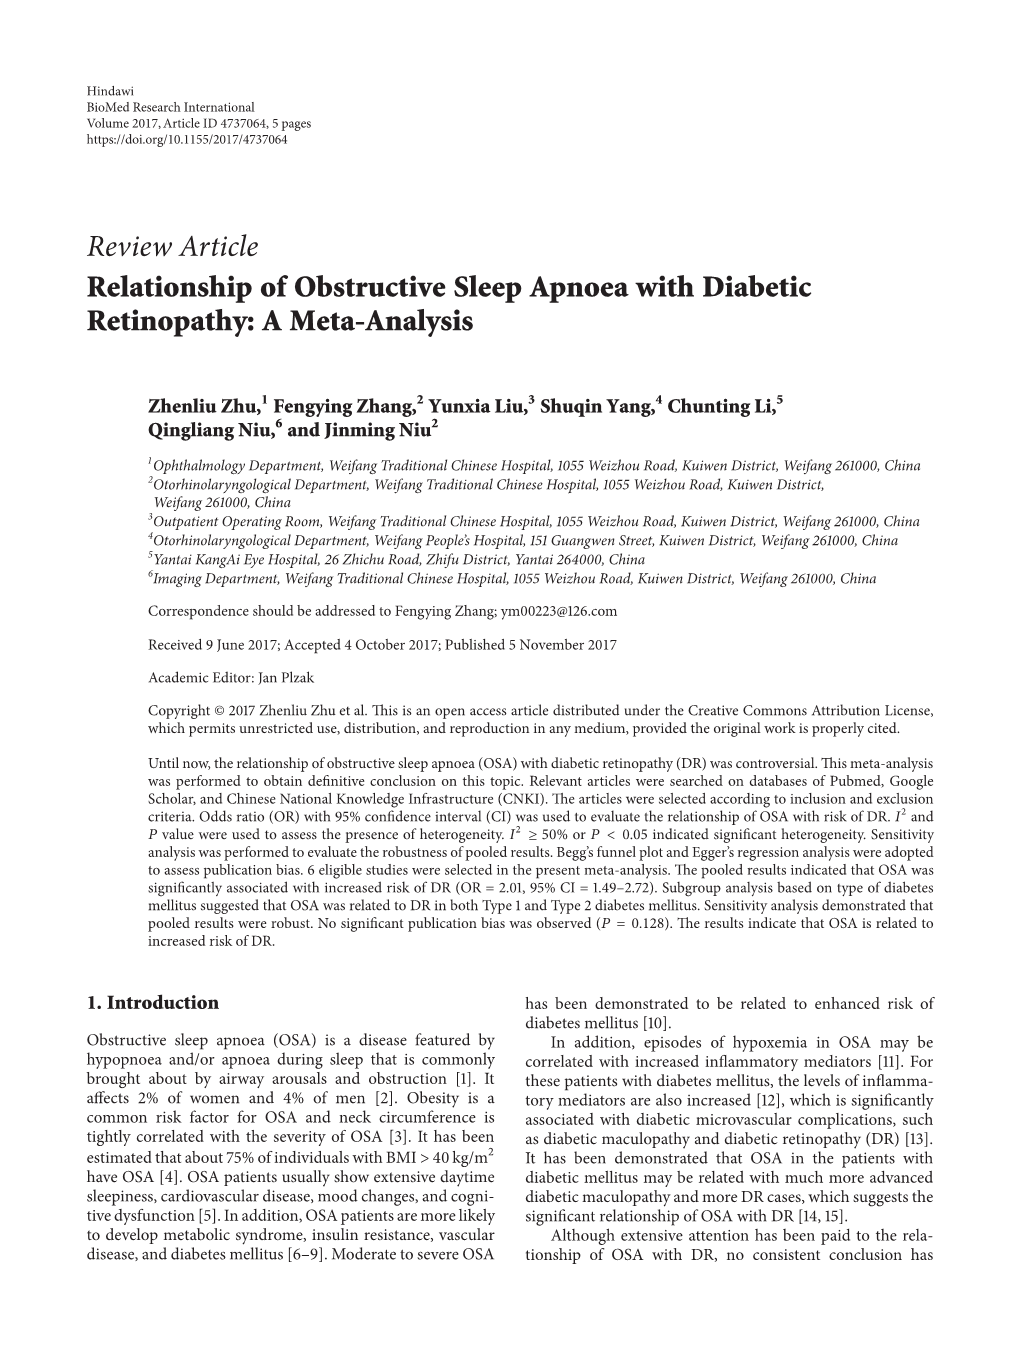 Relationship of Obstructive Sleep Apnoea with Diabetic Retinopathy: a Meta-Analysis